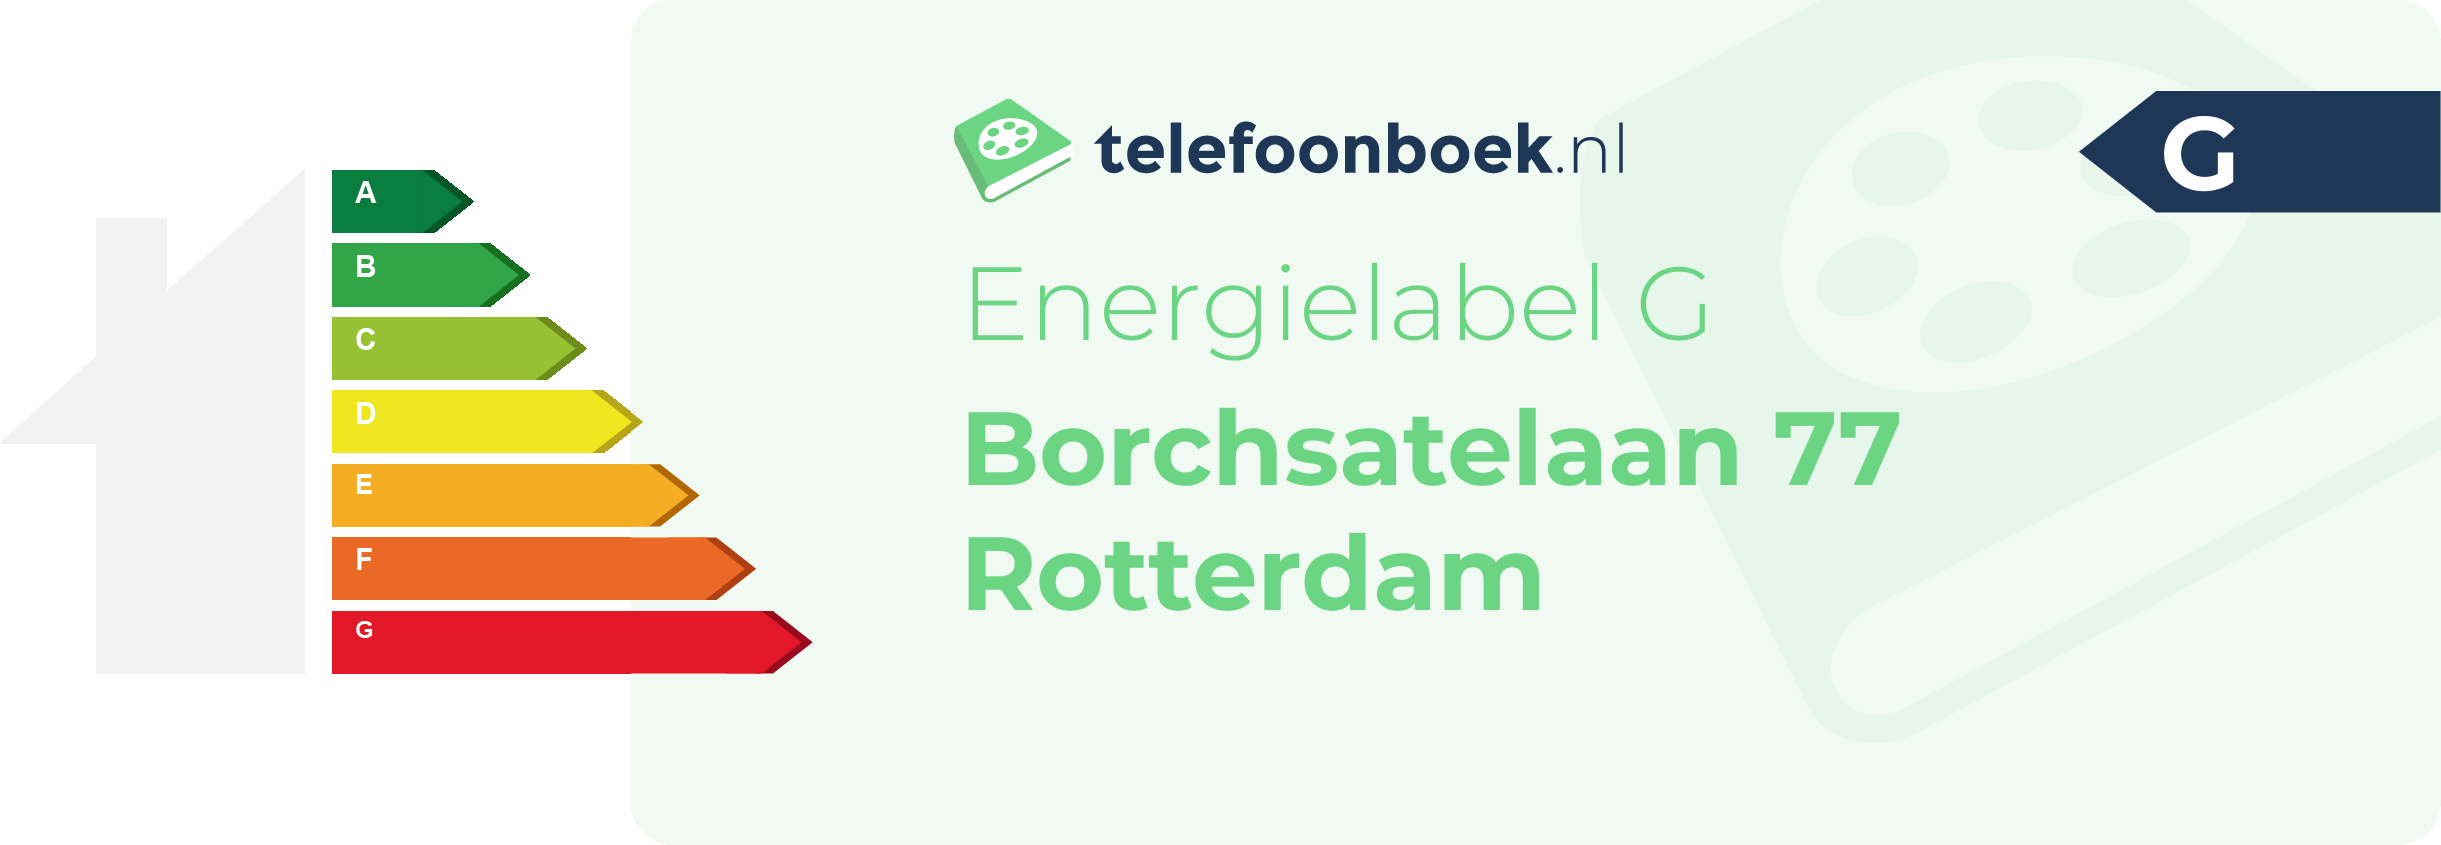 Energielabel Borchsatelaan 77 Rotterdam